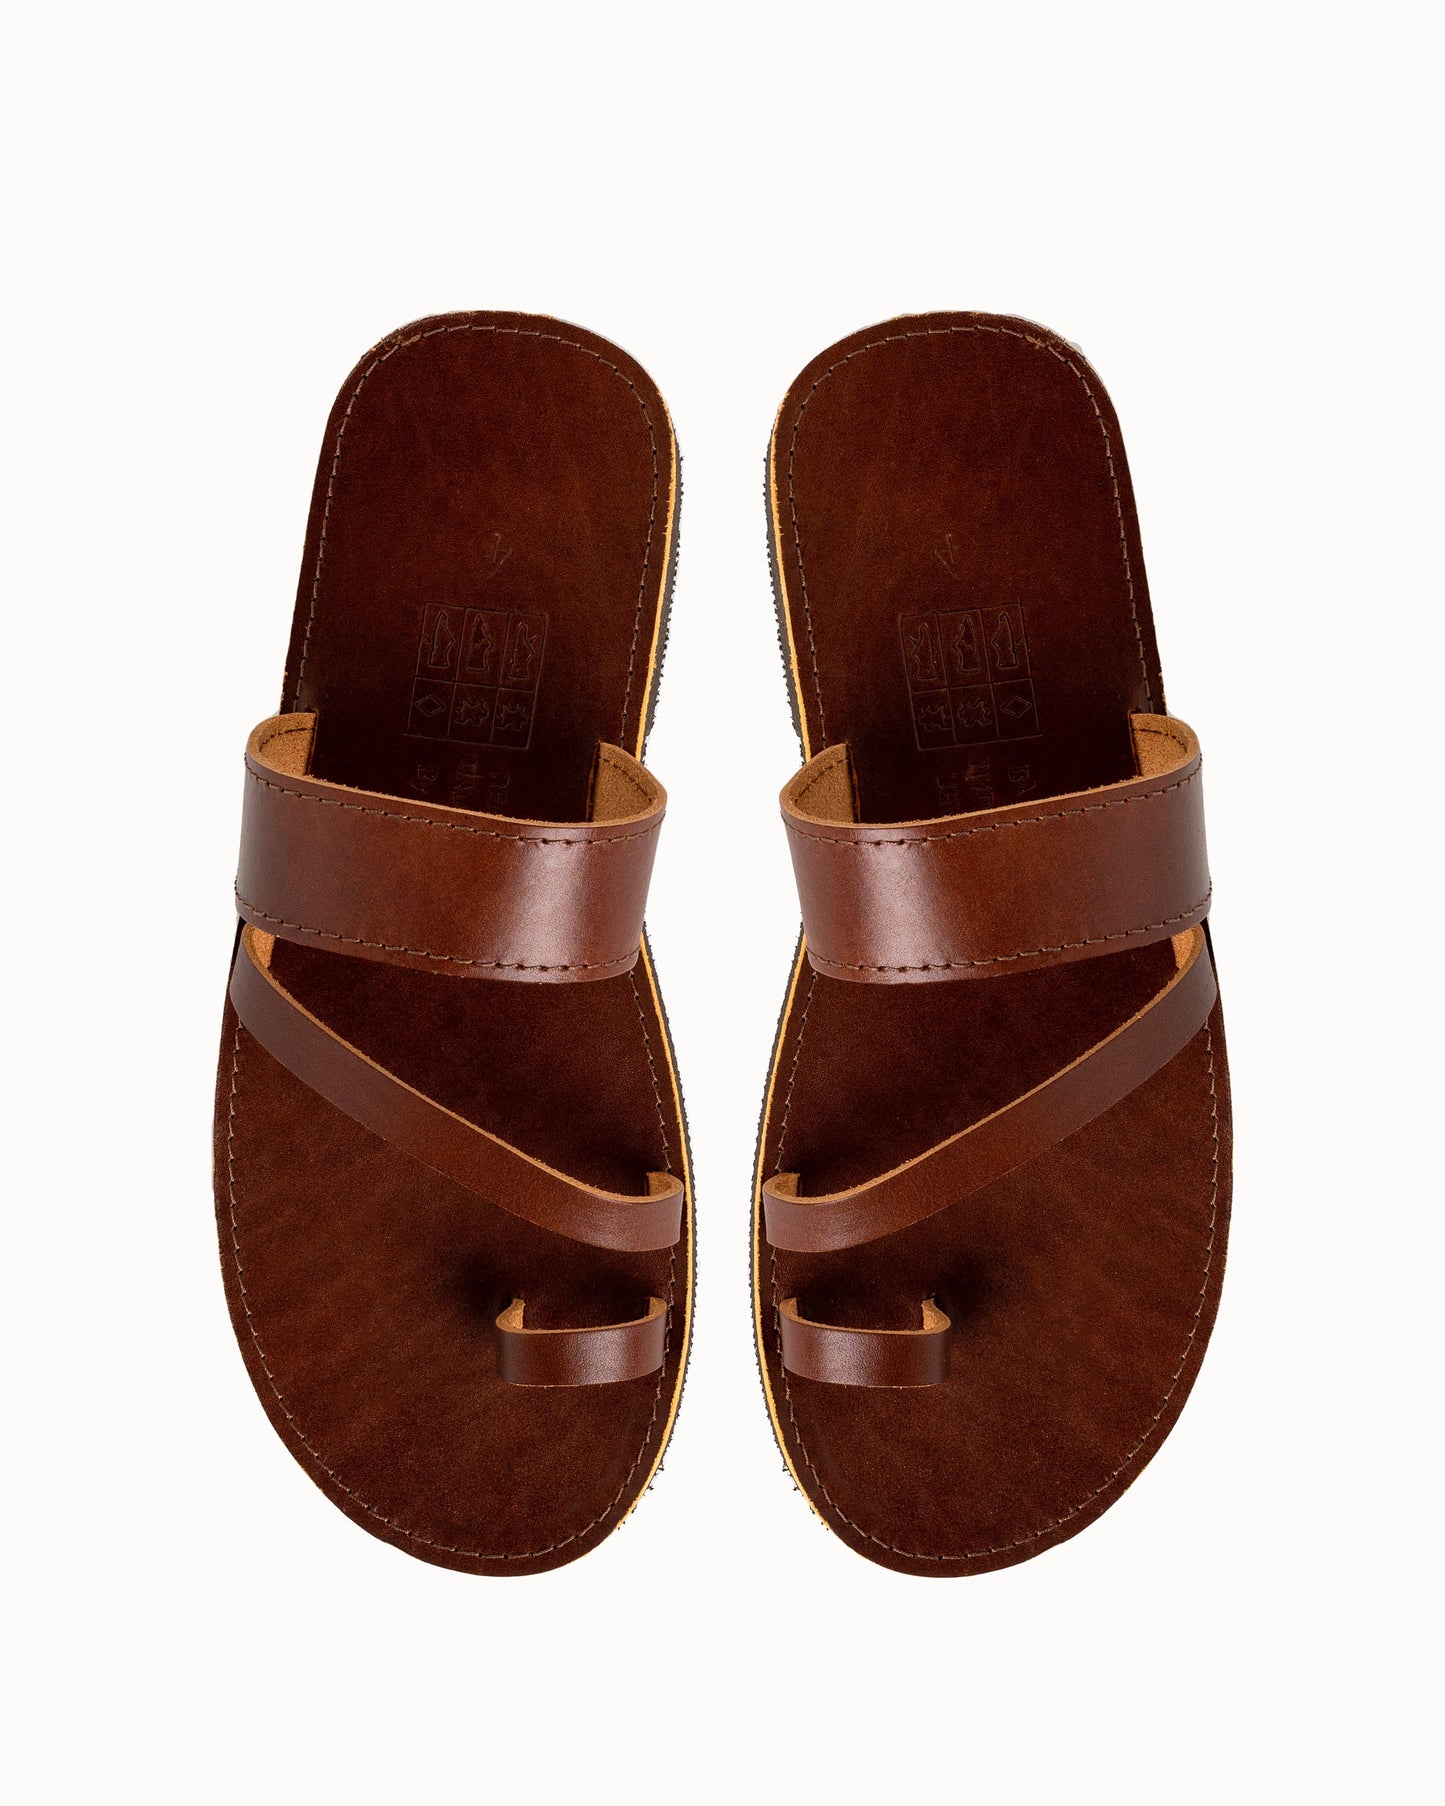 Brown leather sandals, Greek mens leather sandals, Toe ring summer leather sandals, sandalen damen, Summer shoes men